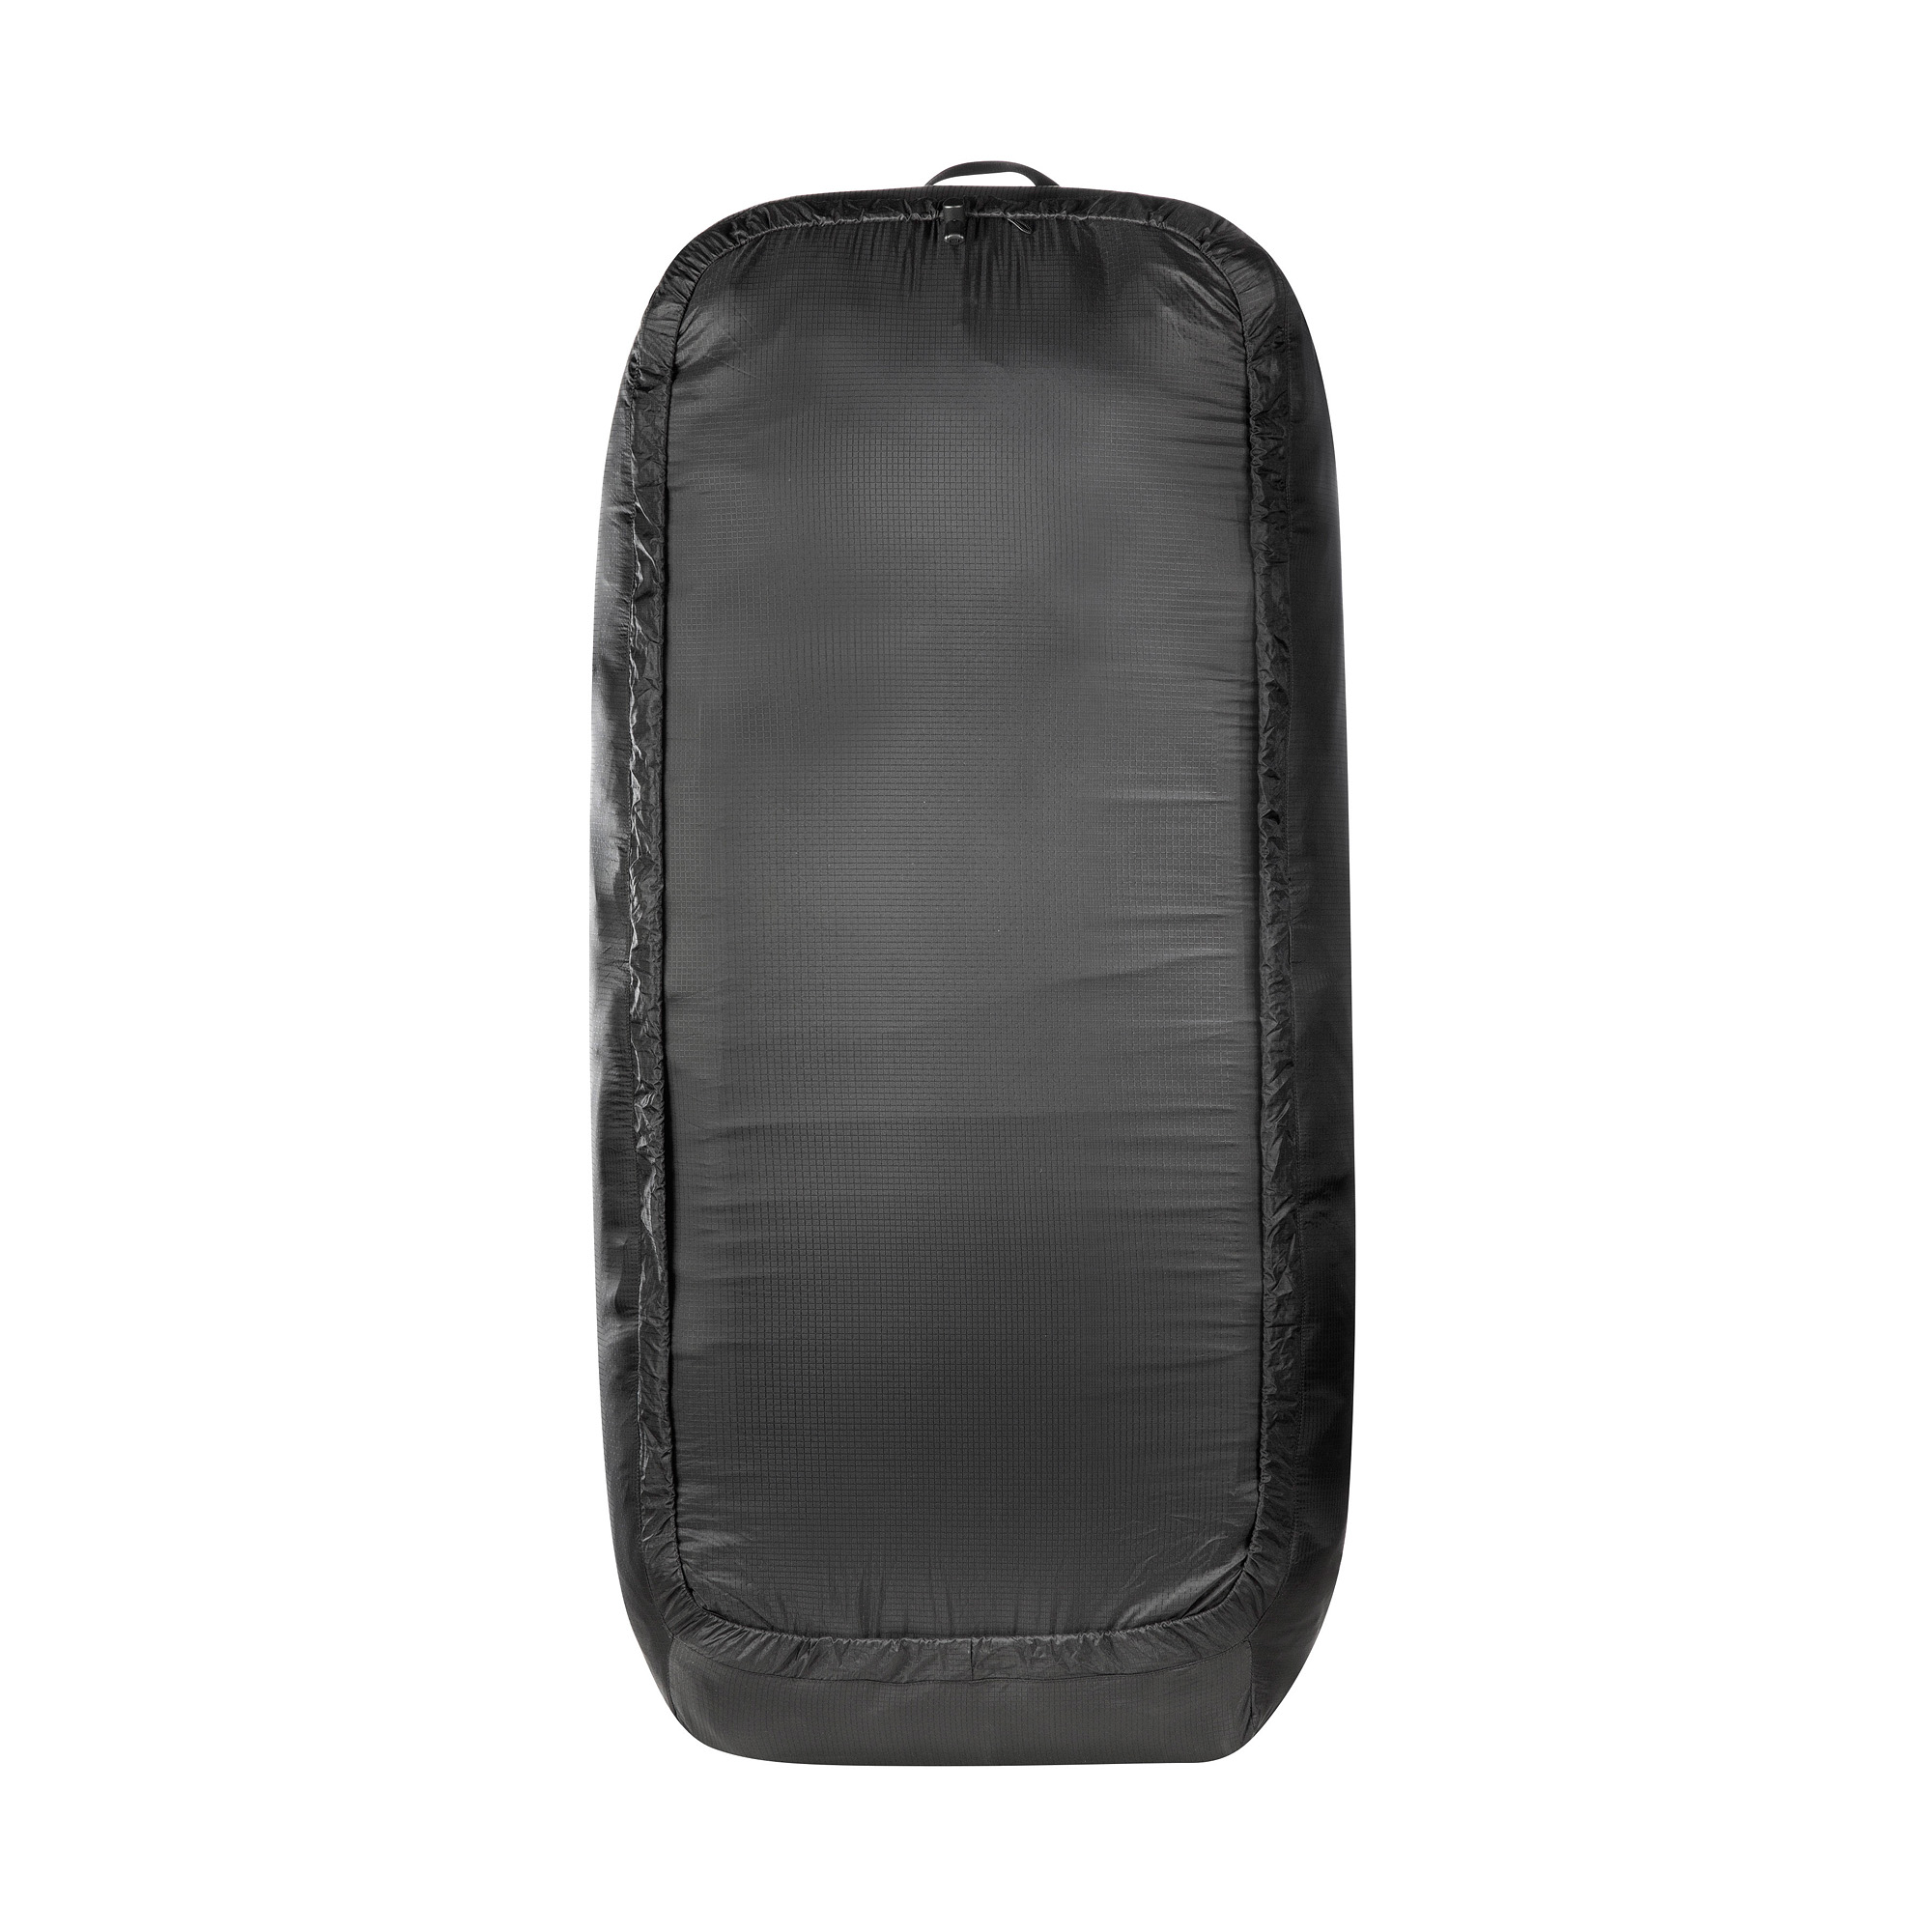 Tatonka Luggage Protector 95l black schwarz Rucksack-Zubehör 4013236355109